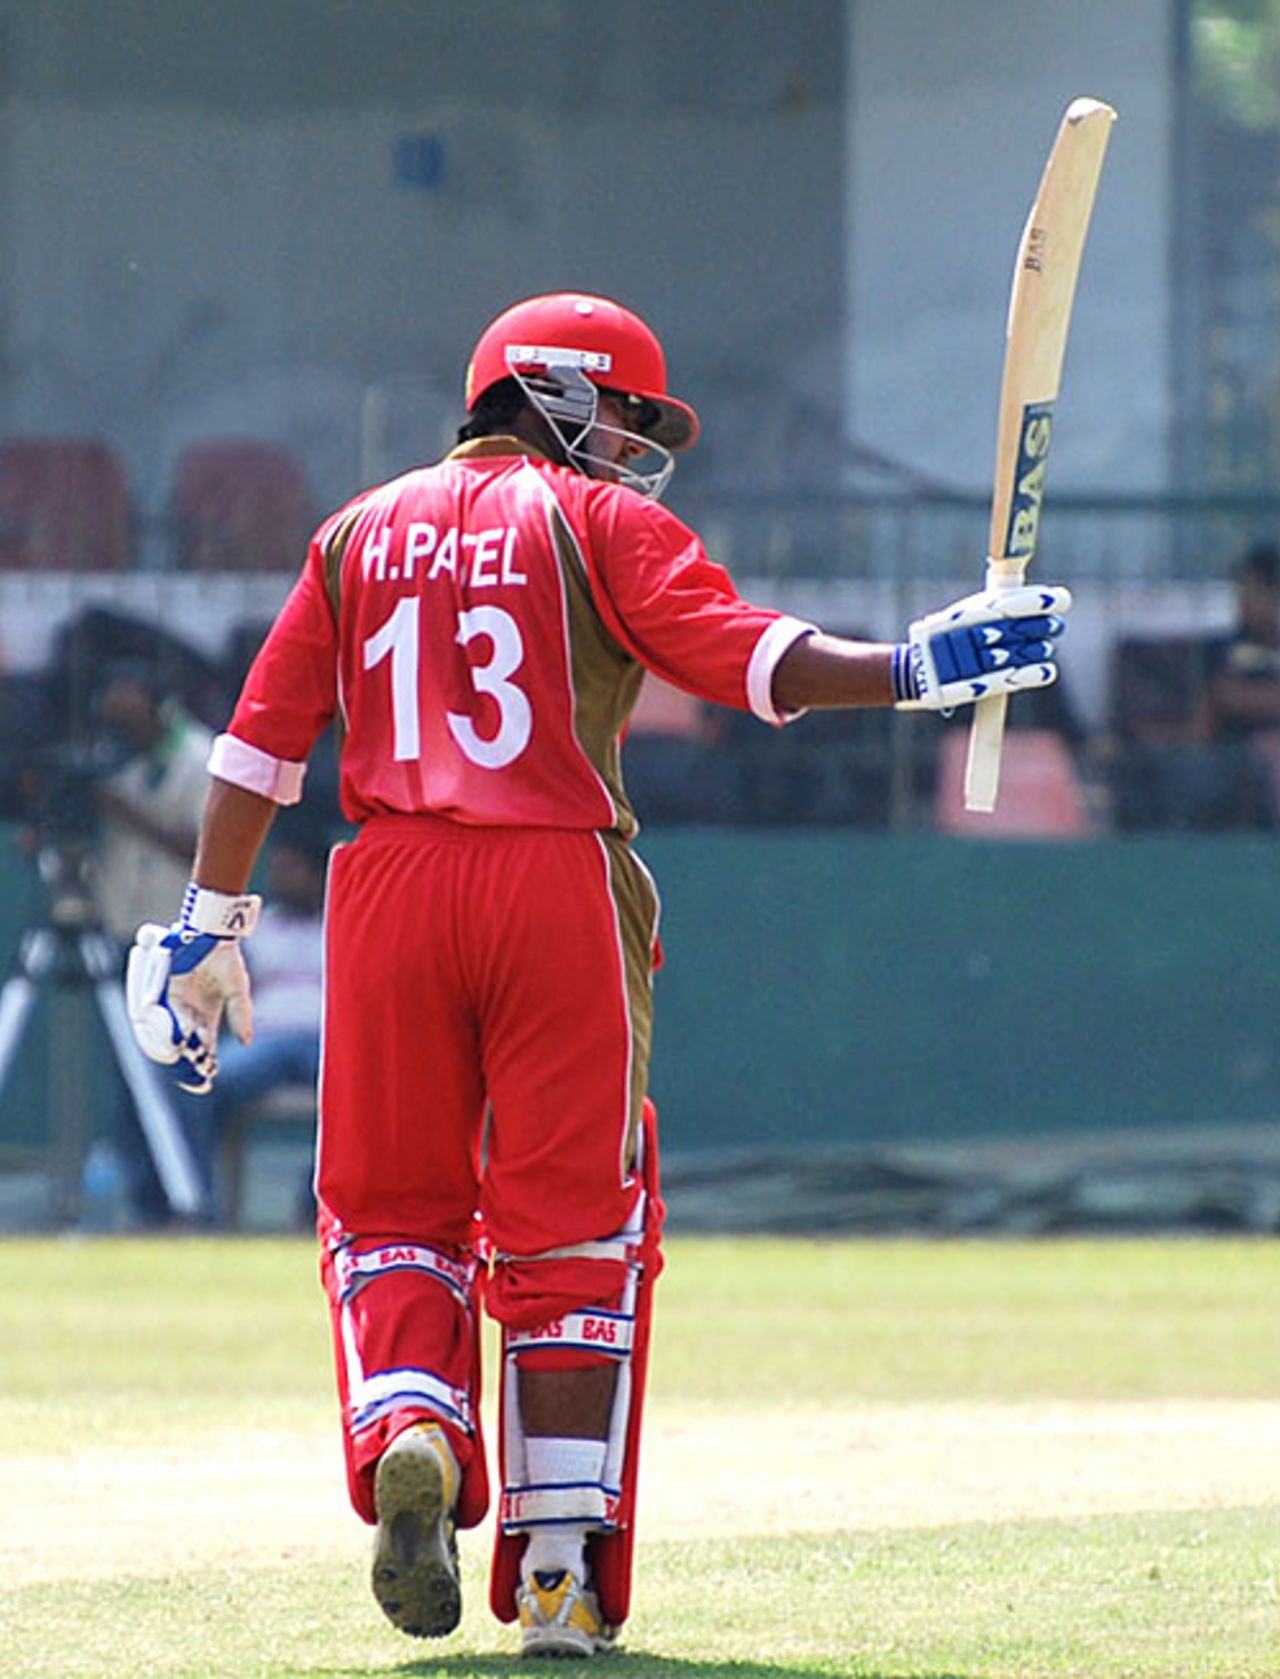 Hiral Patel's innings lifted Canada, Canada v Ireland, Sri Lanka Associates T20 Series, 3rd Match, Colombo, February 3, 2010